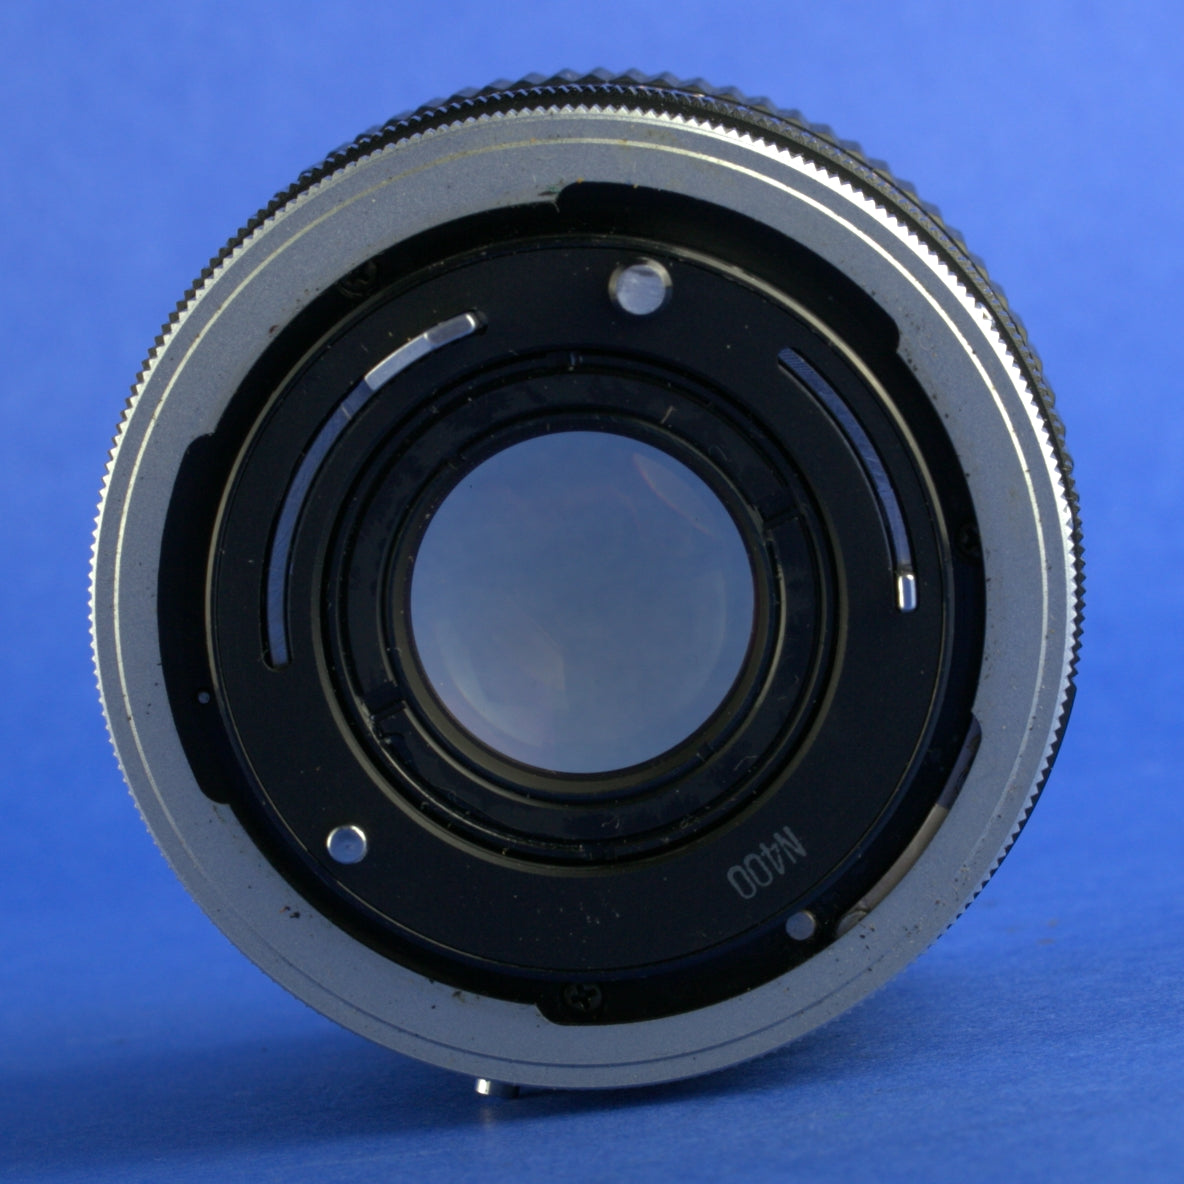 Canon FD 35mm F2 Concave "O" Lens